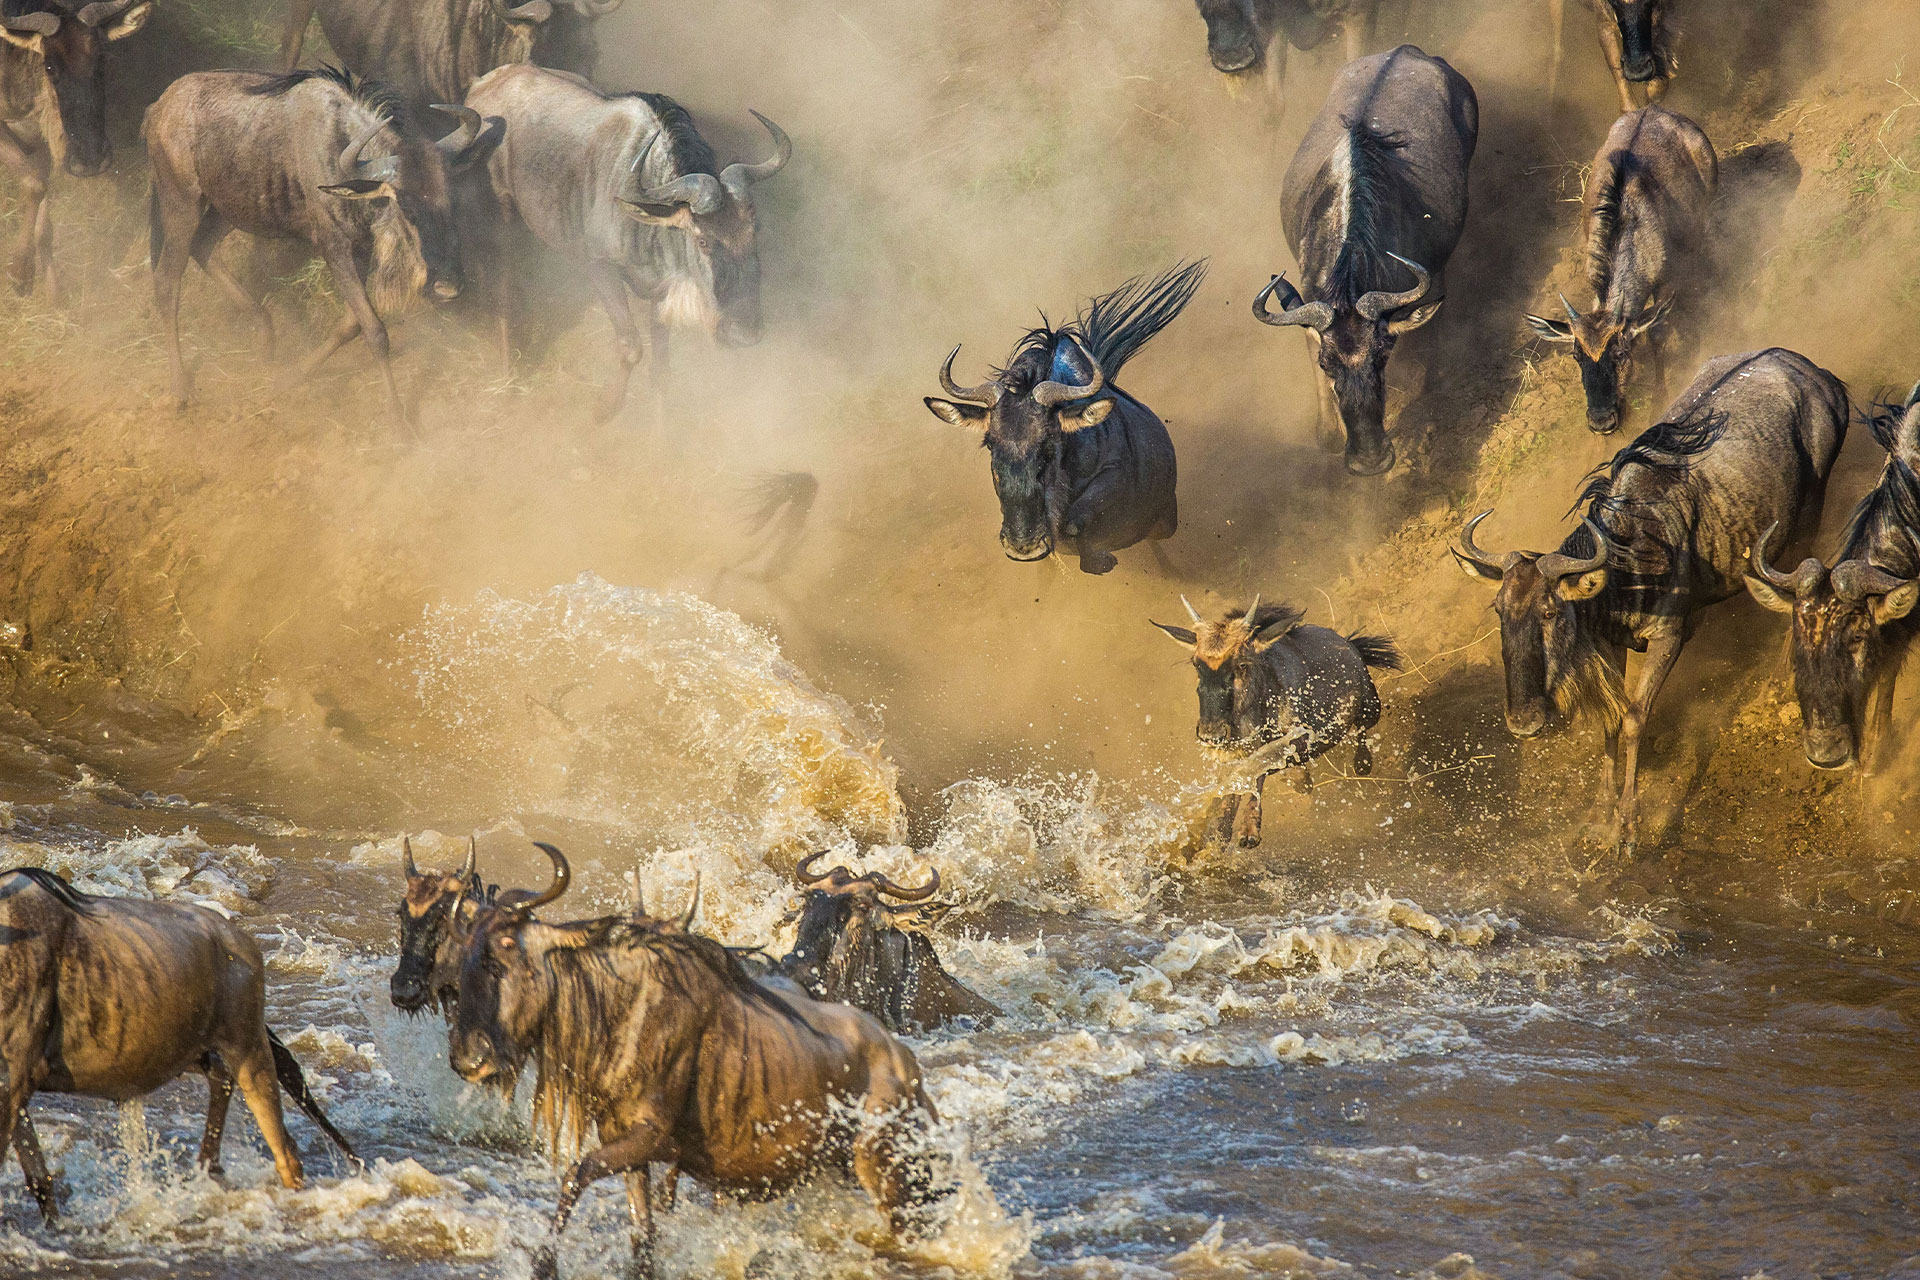 The famous Mara River crossing